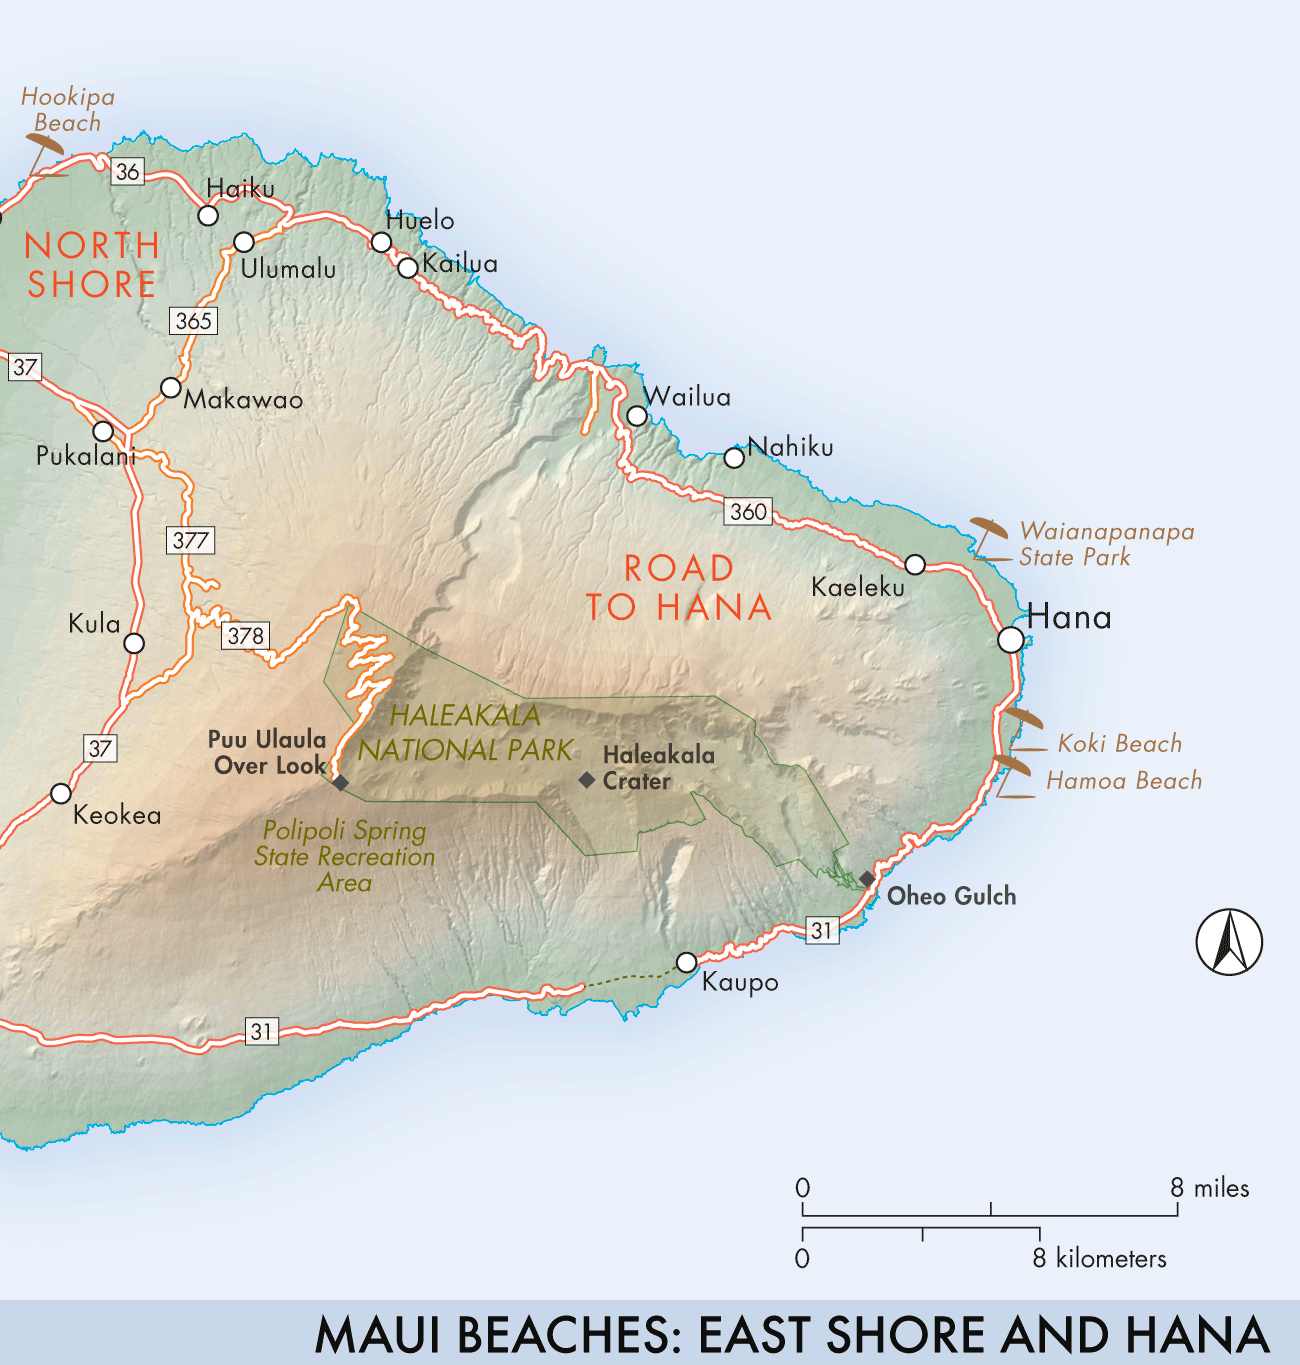 Maui Beaches: East Shore and Hana